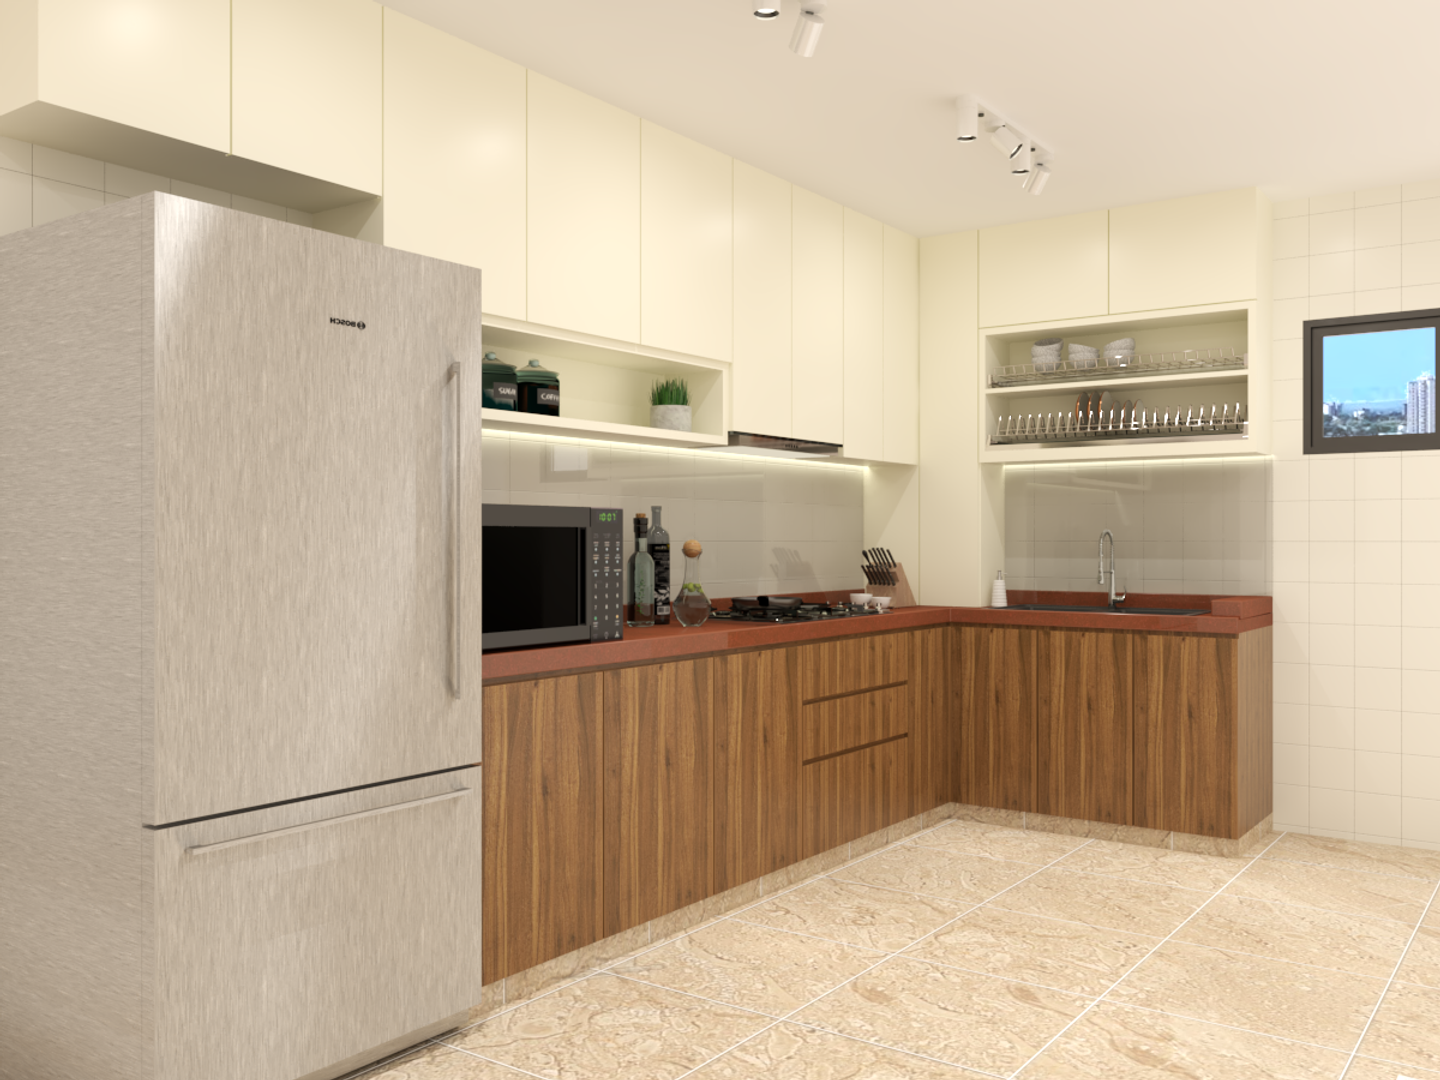 Open and Closed Cabinet Contemporary Kitchen Design - Livspace